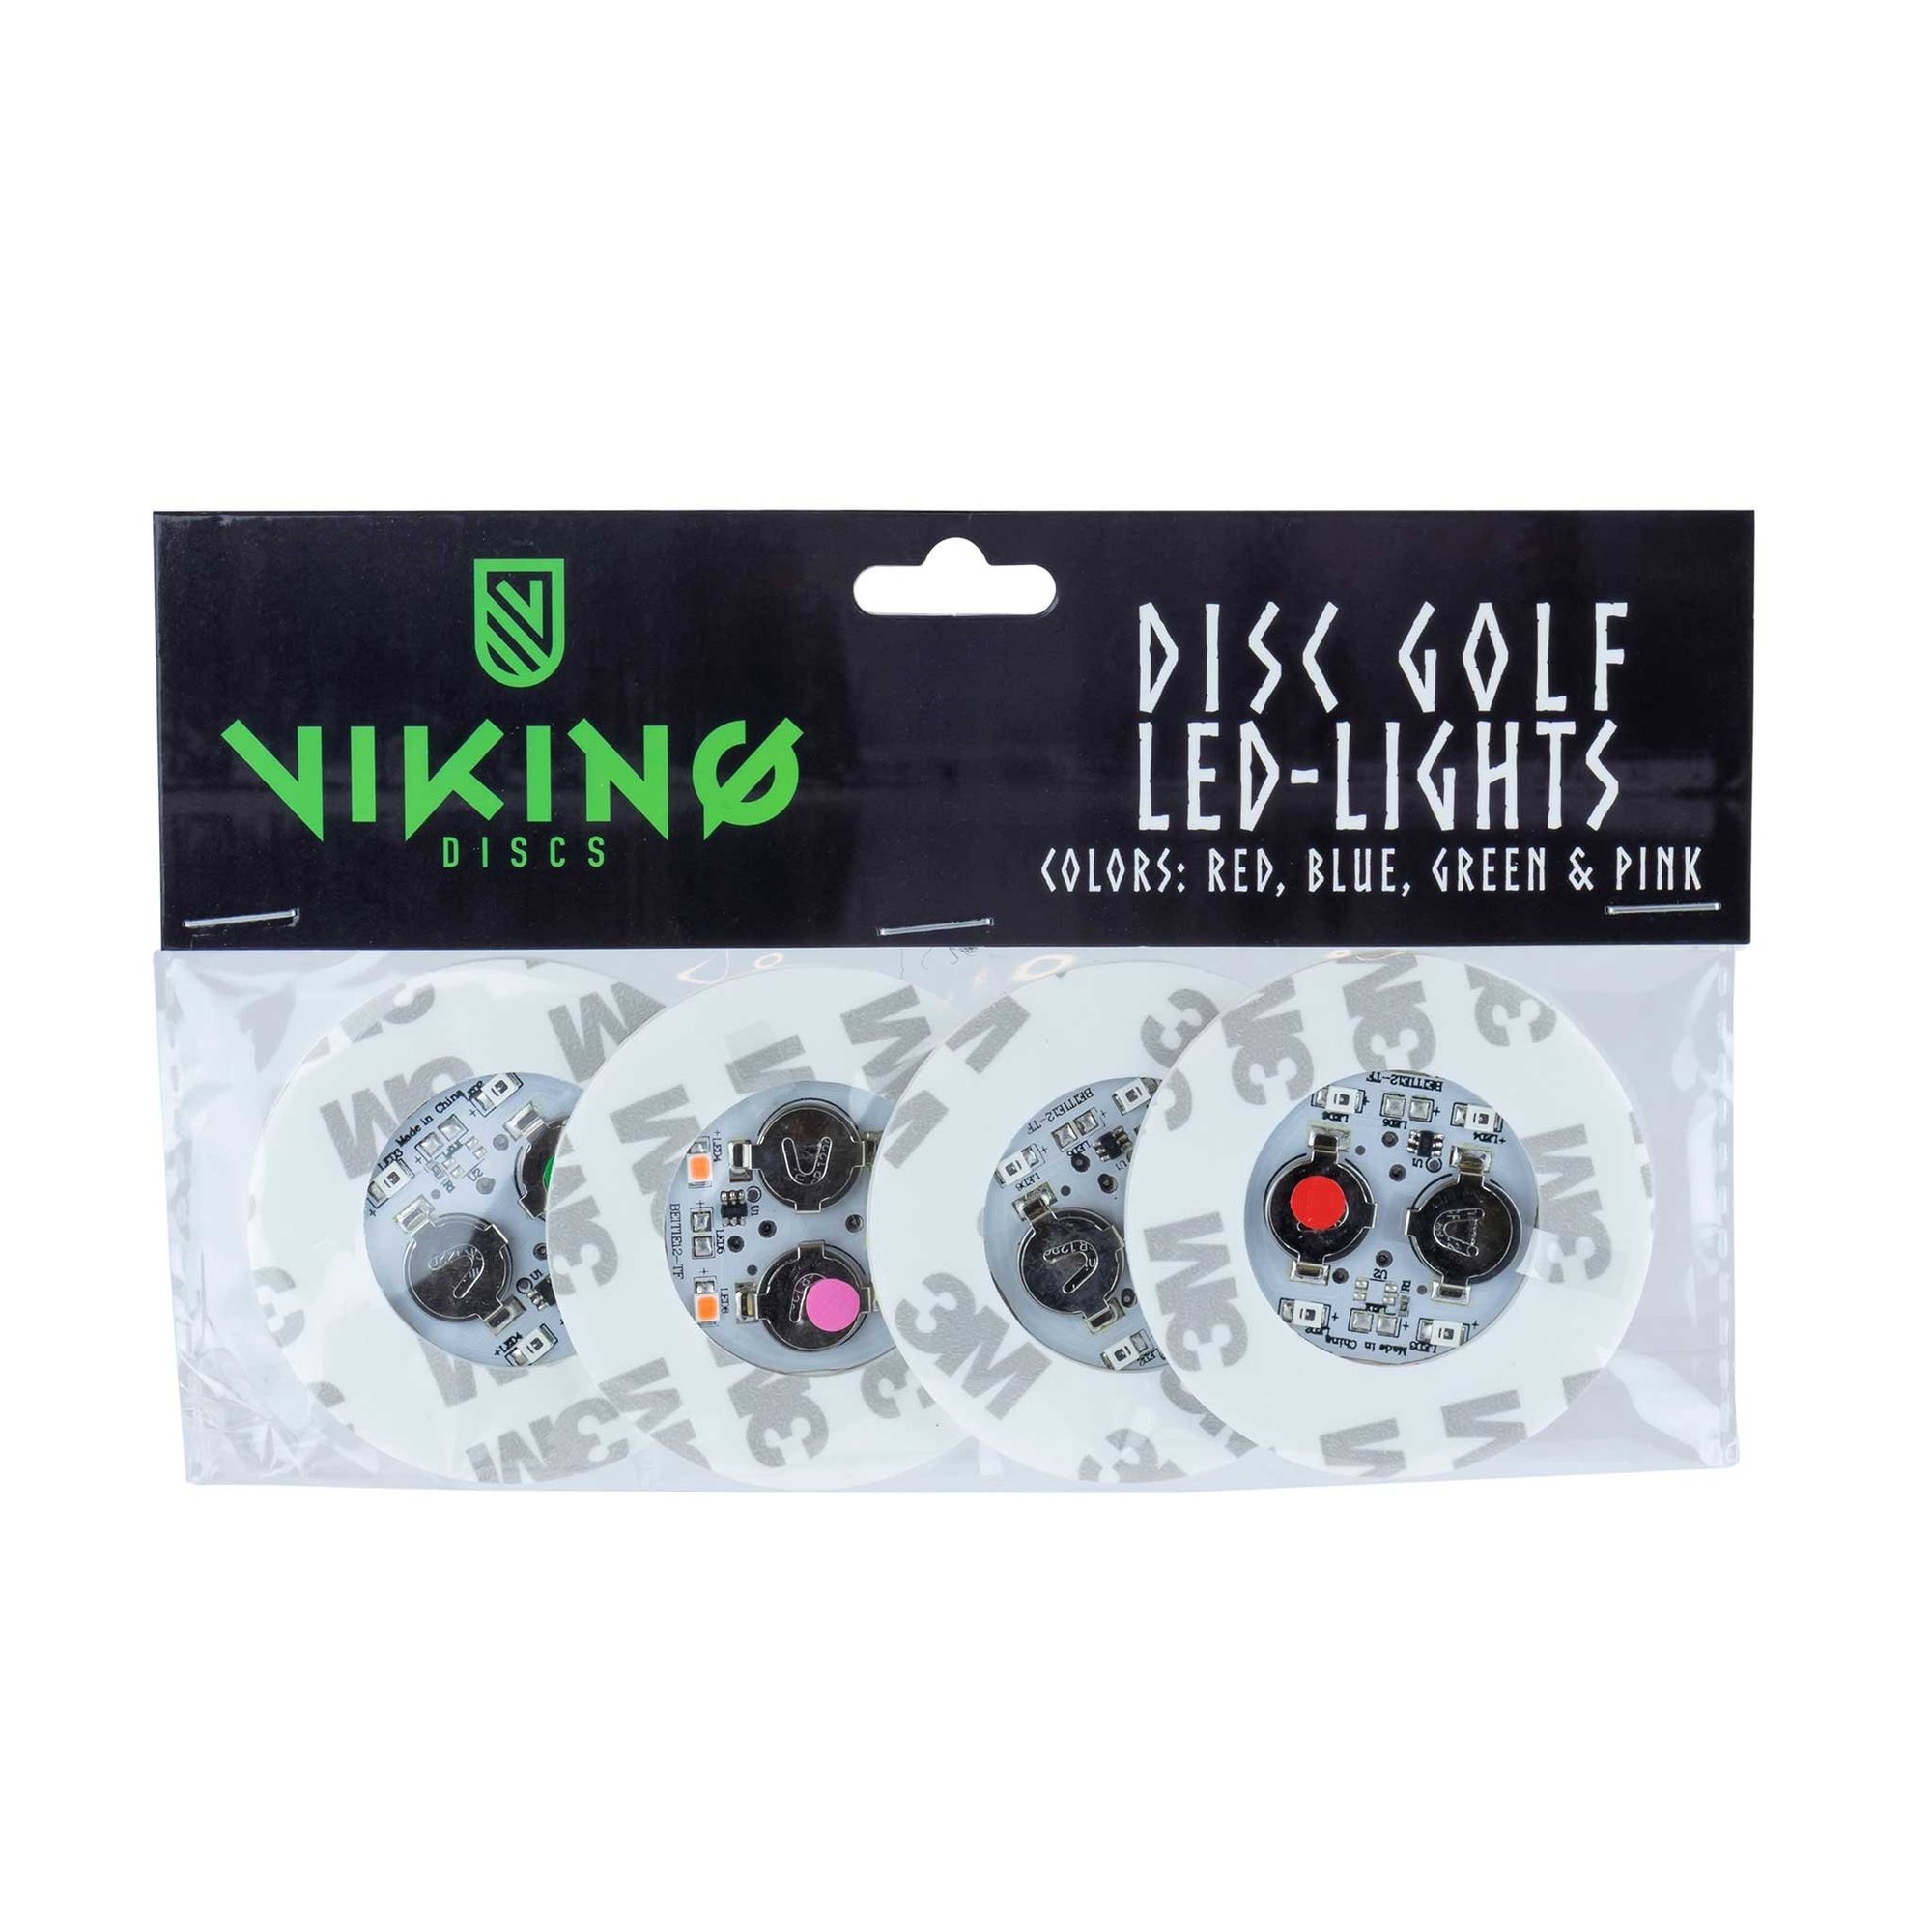 Viking Discs – Led Lights